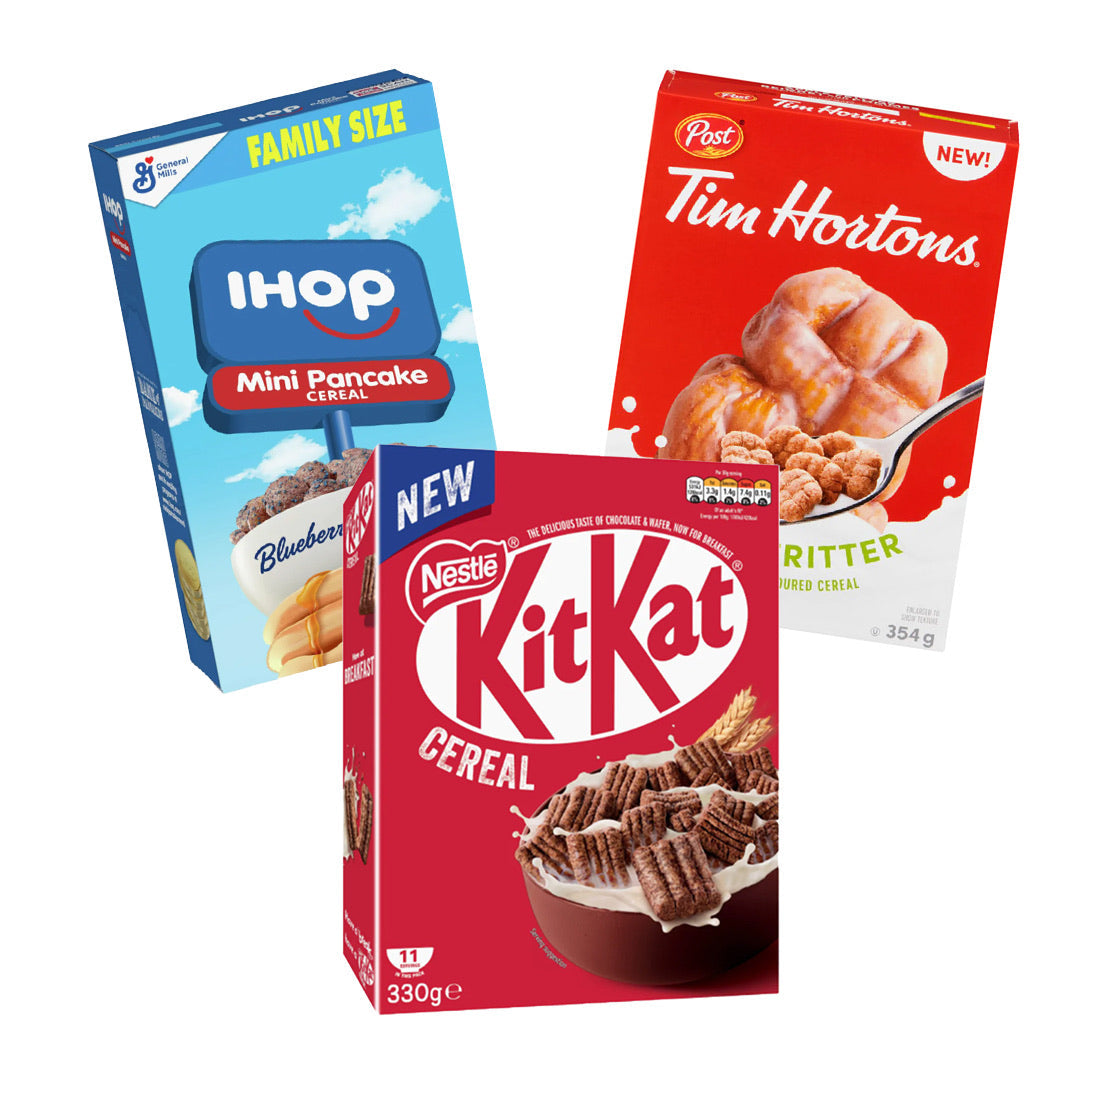 Tim Hortons now has a whole new menu featuring Kit Kat treats